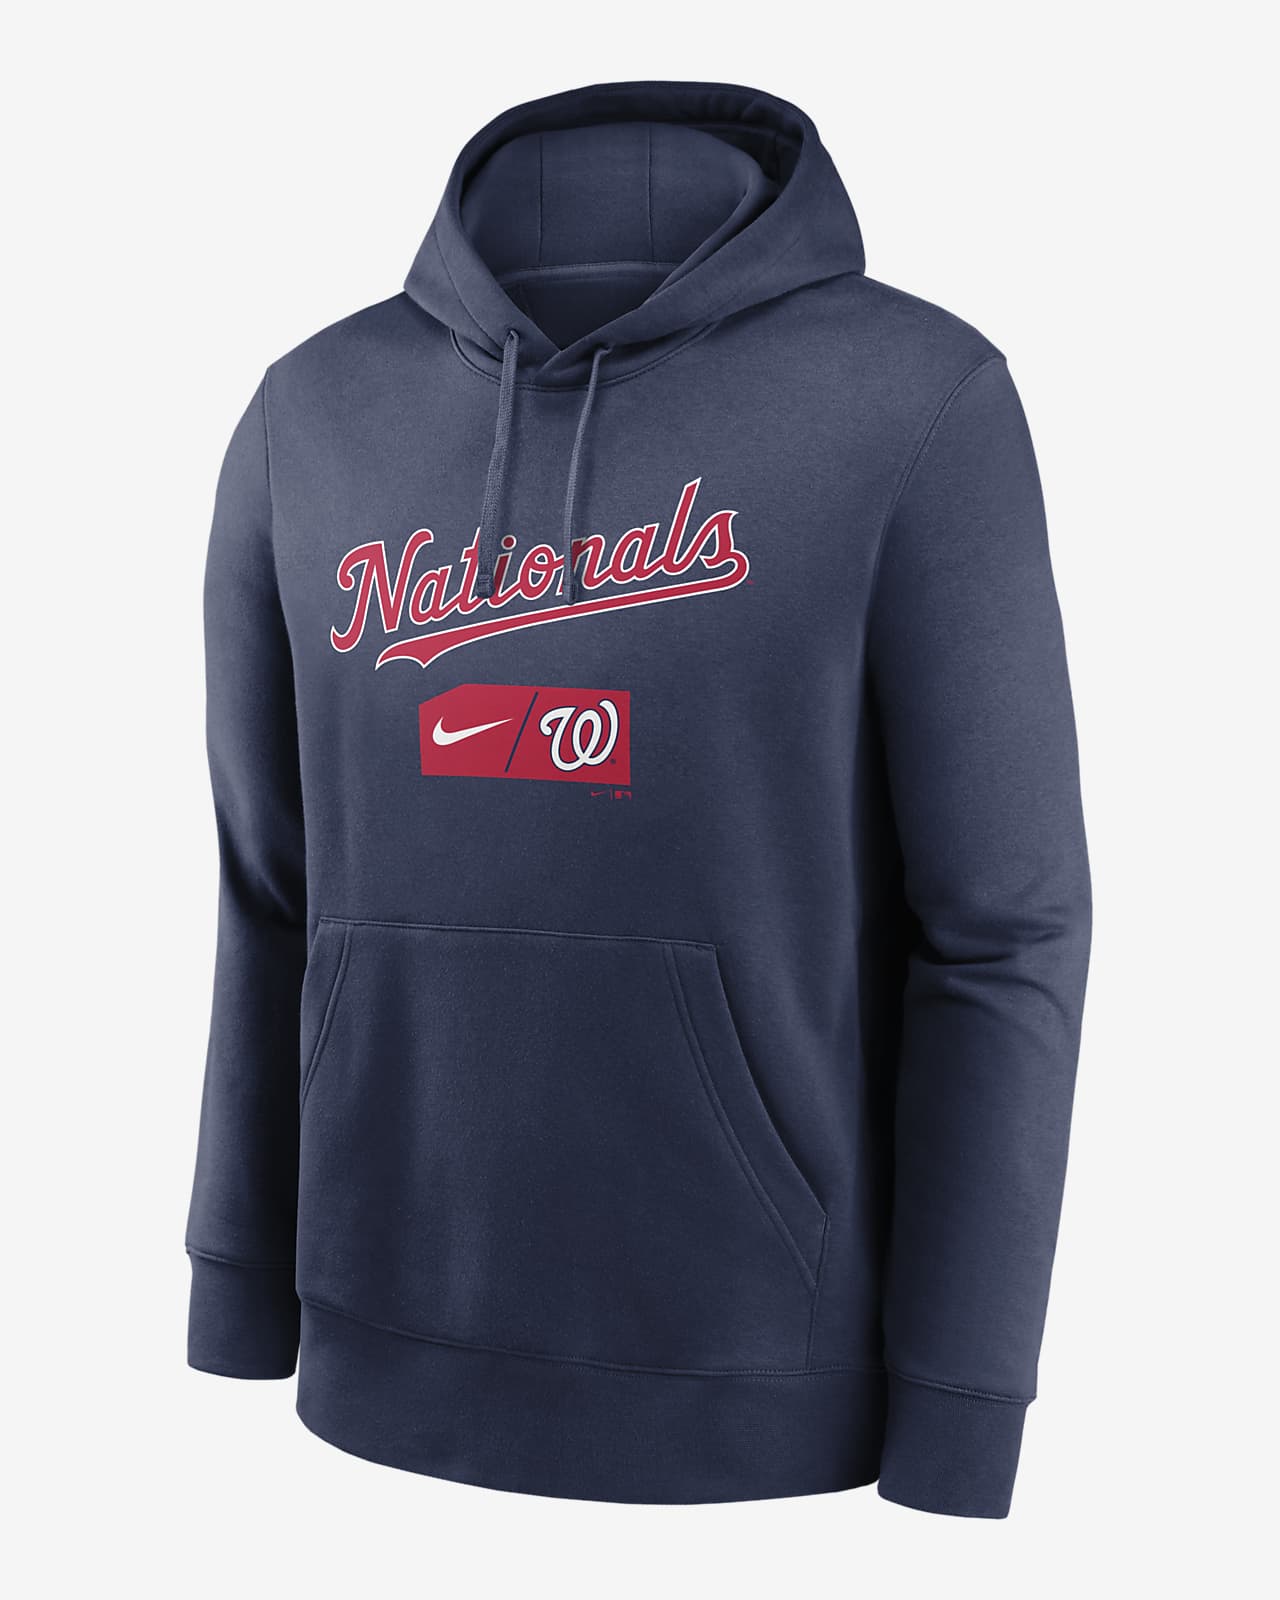 washington nationals nike hoodie